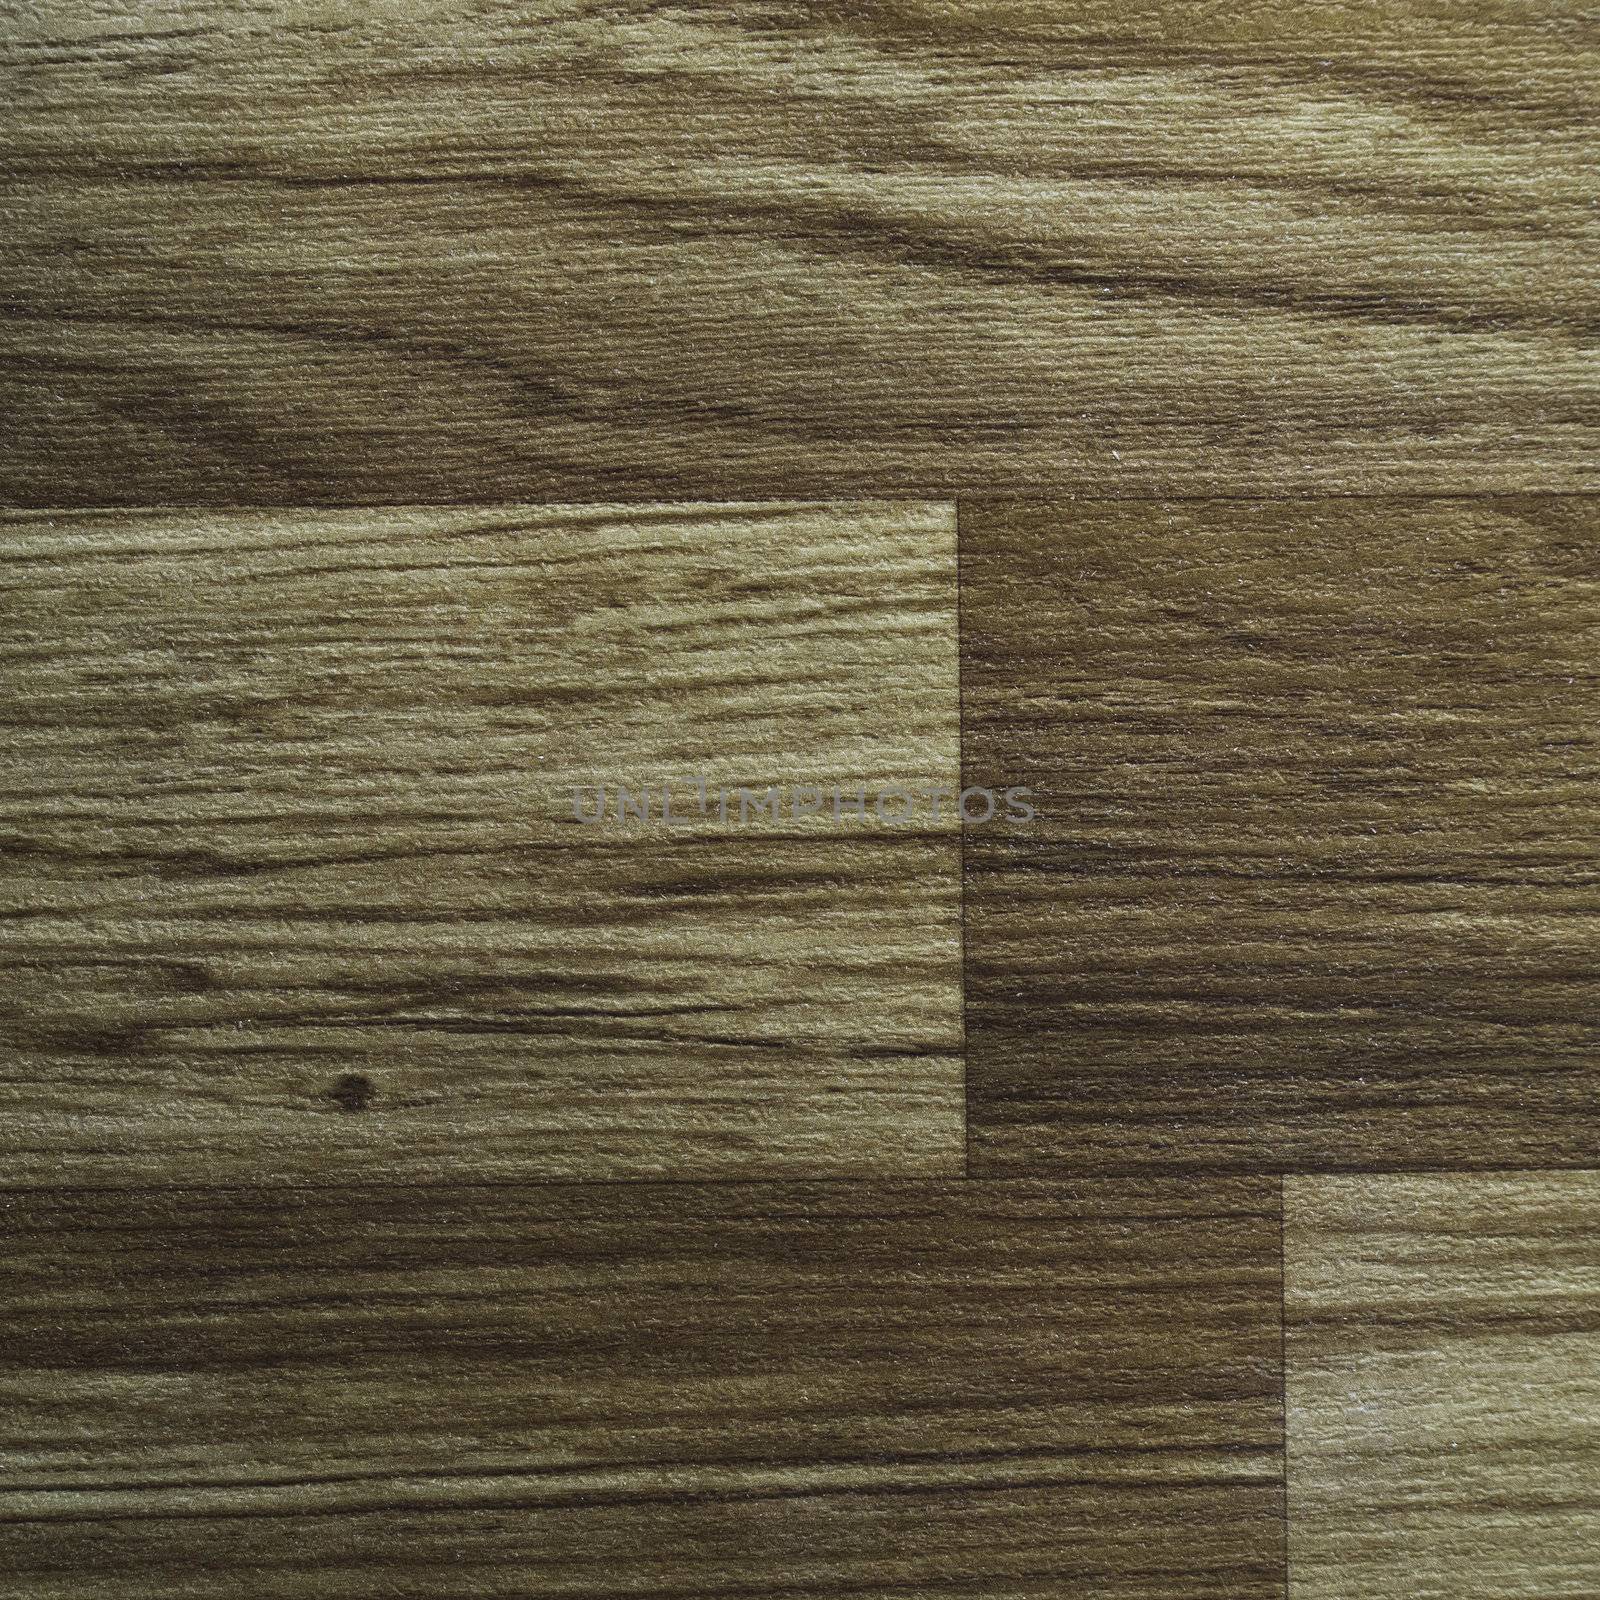 Laminate wooden floor by siraanamwong